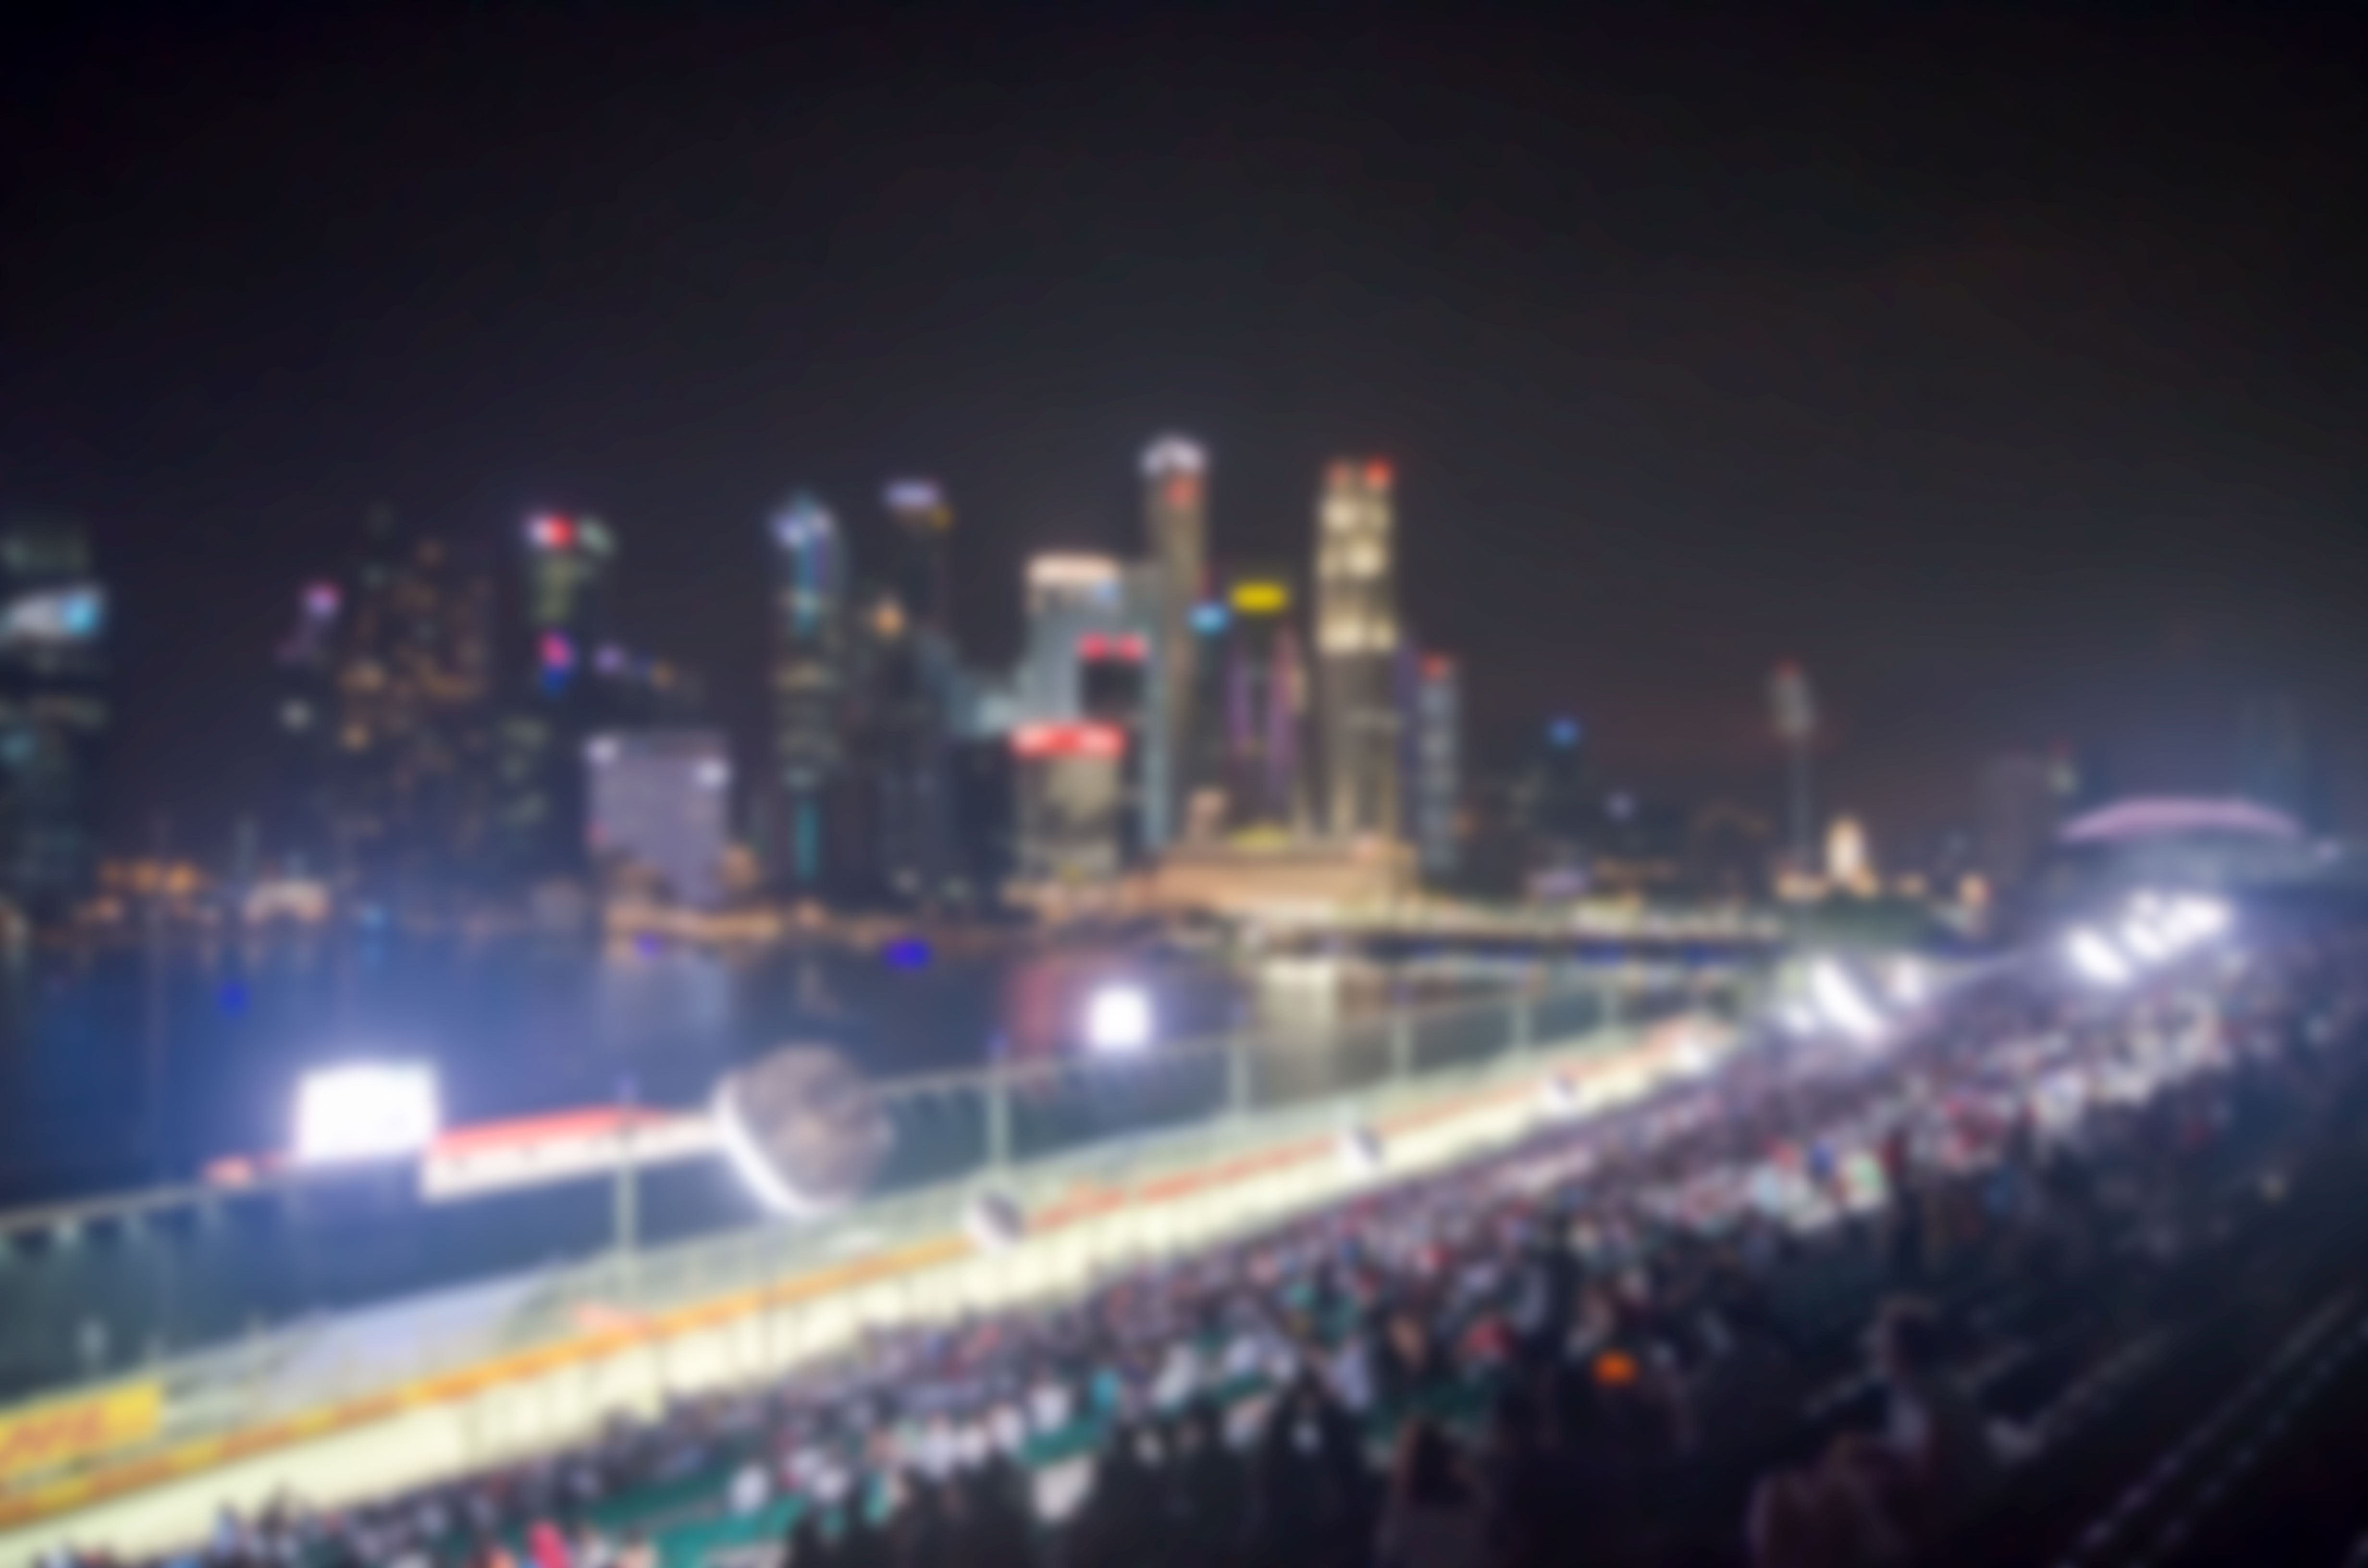 F1 track at the Singapore Grand Prix